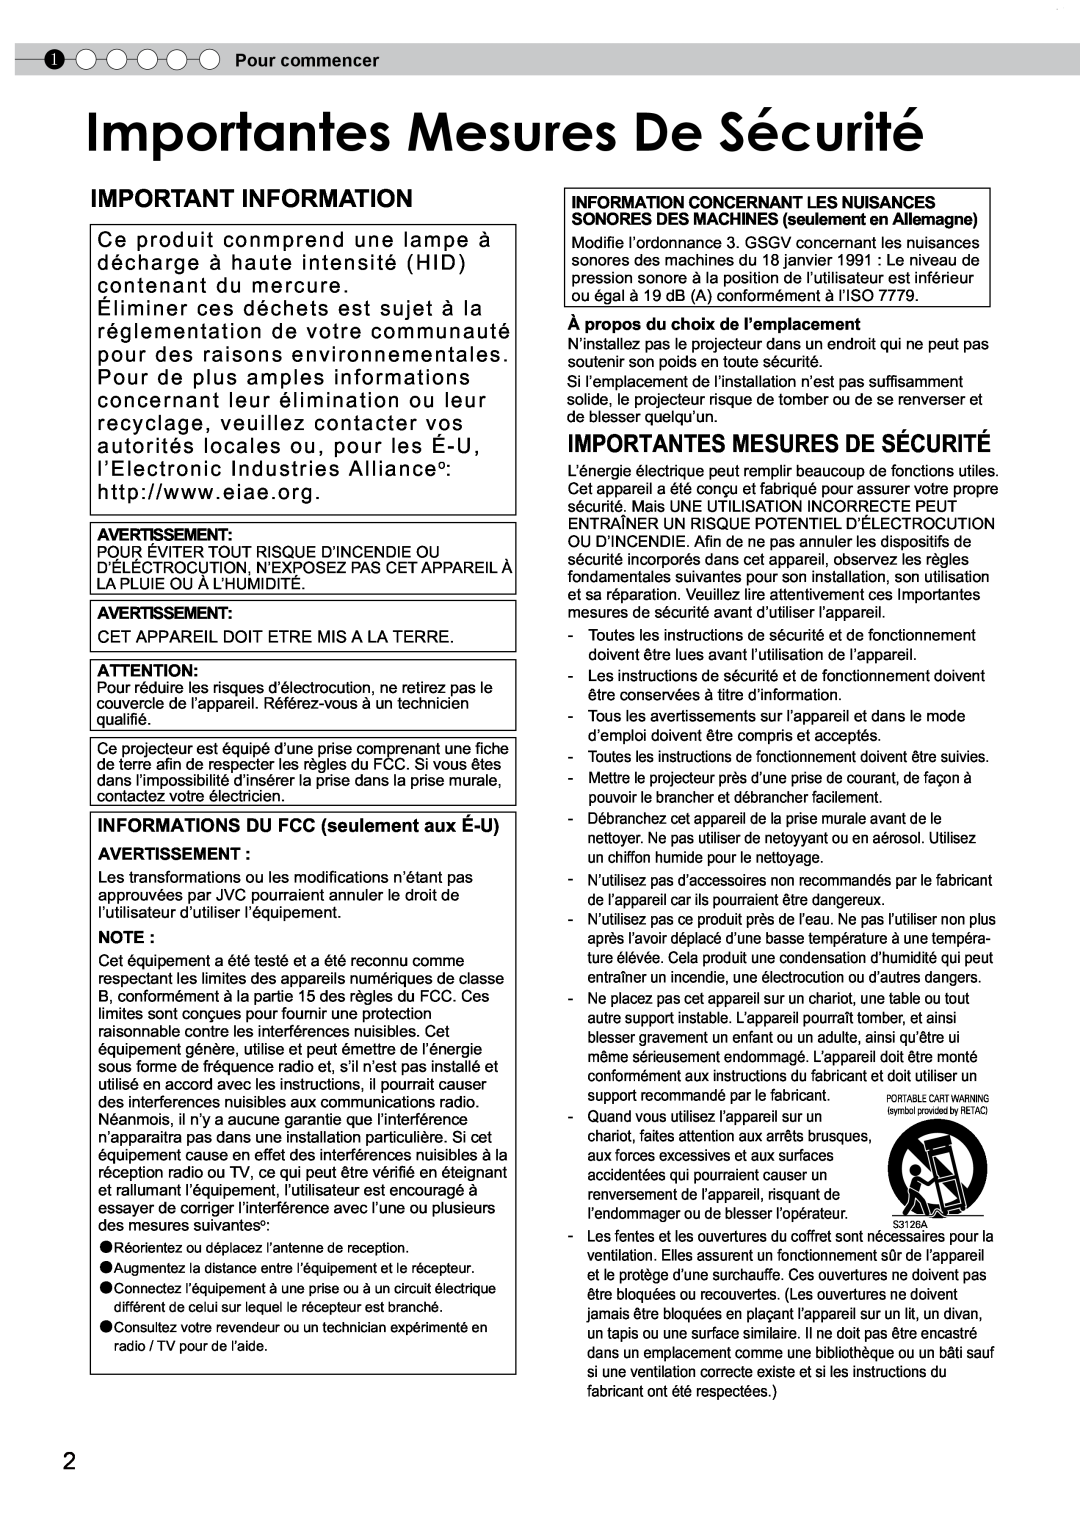 JVC DLA-HD350 manual Importantesortantes MesuresMesuresDeDeSécuritéSécurité, Important Information 